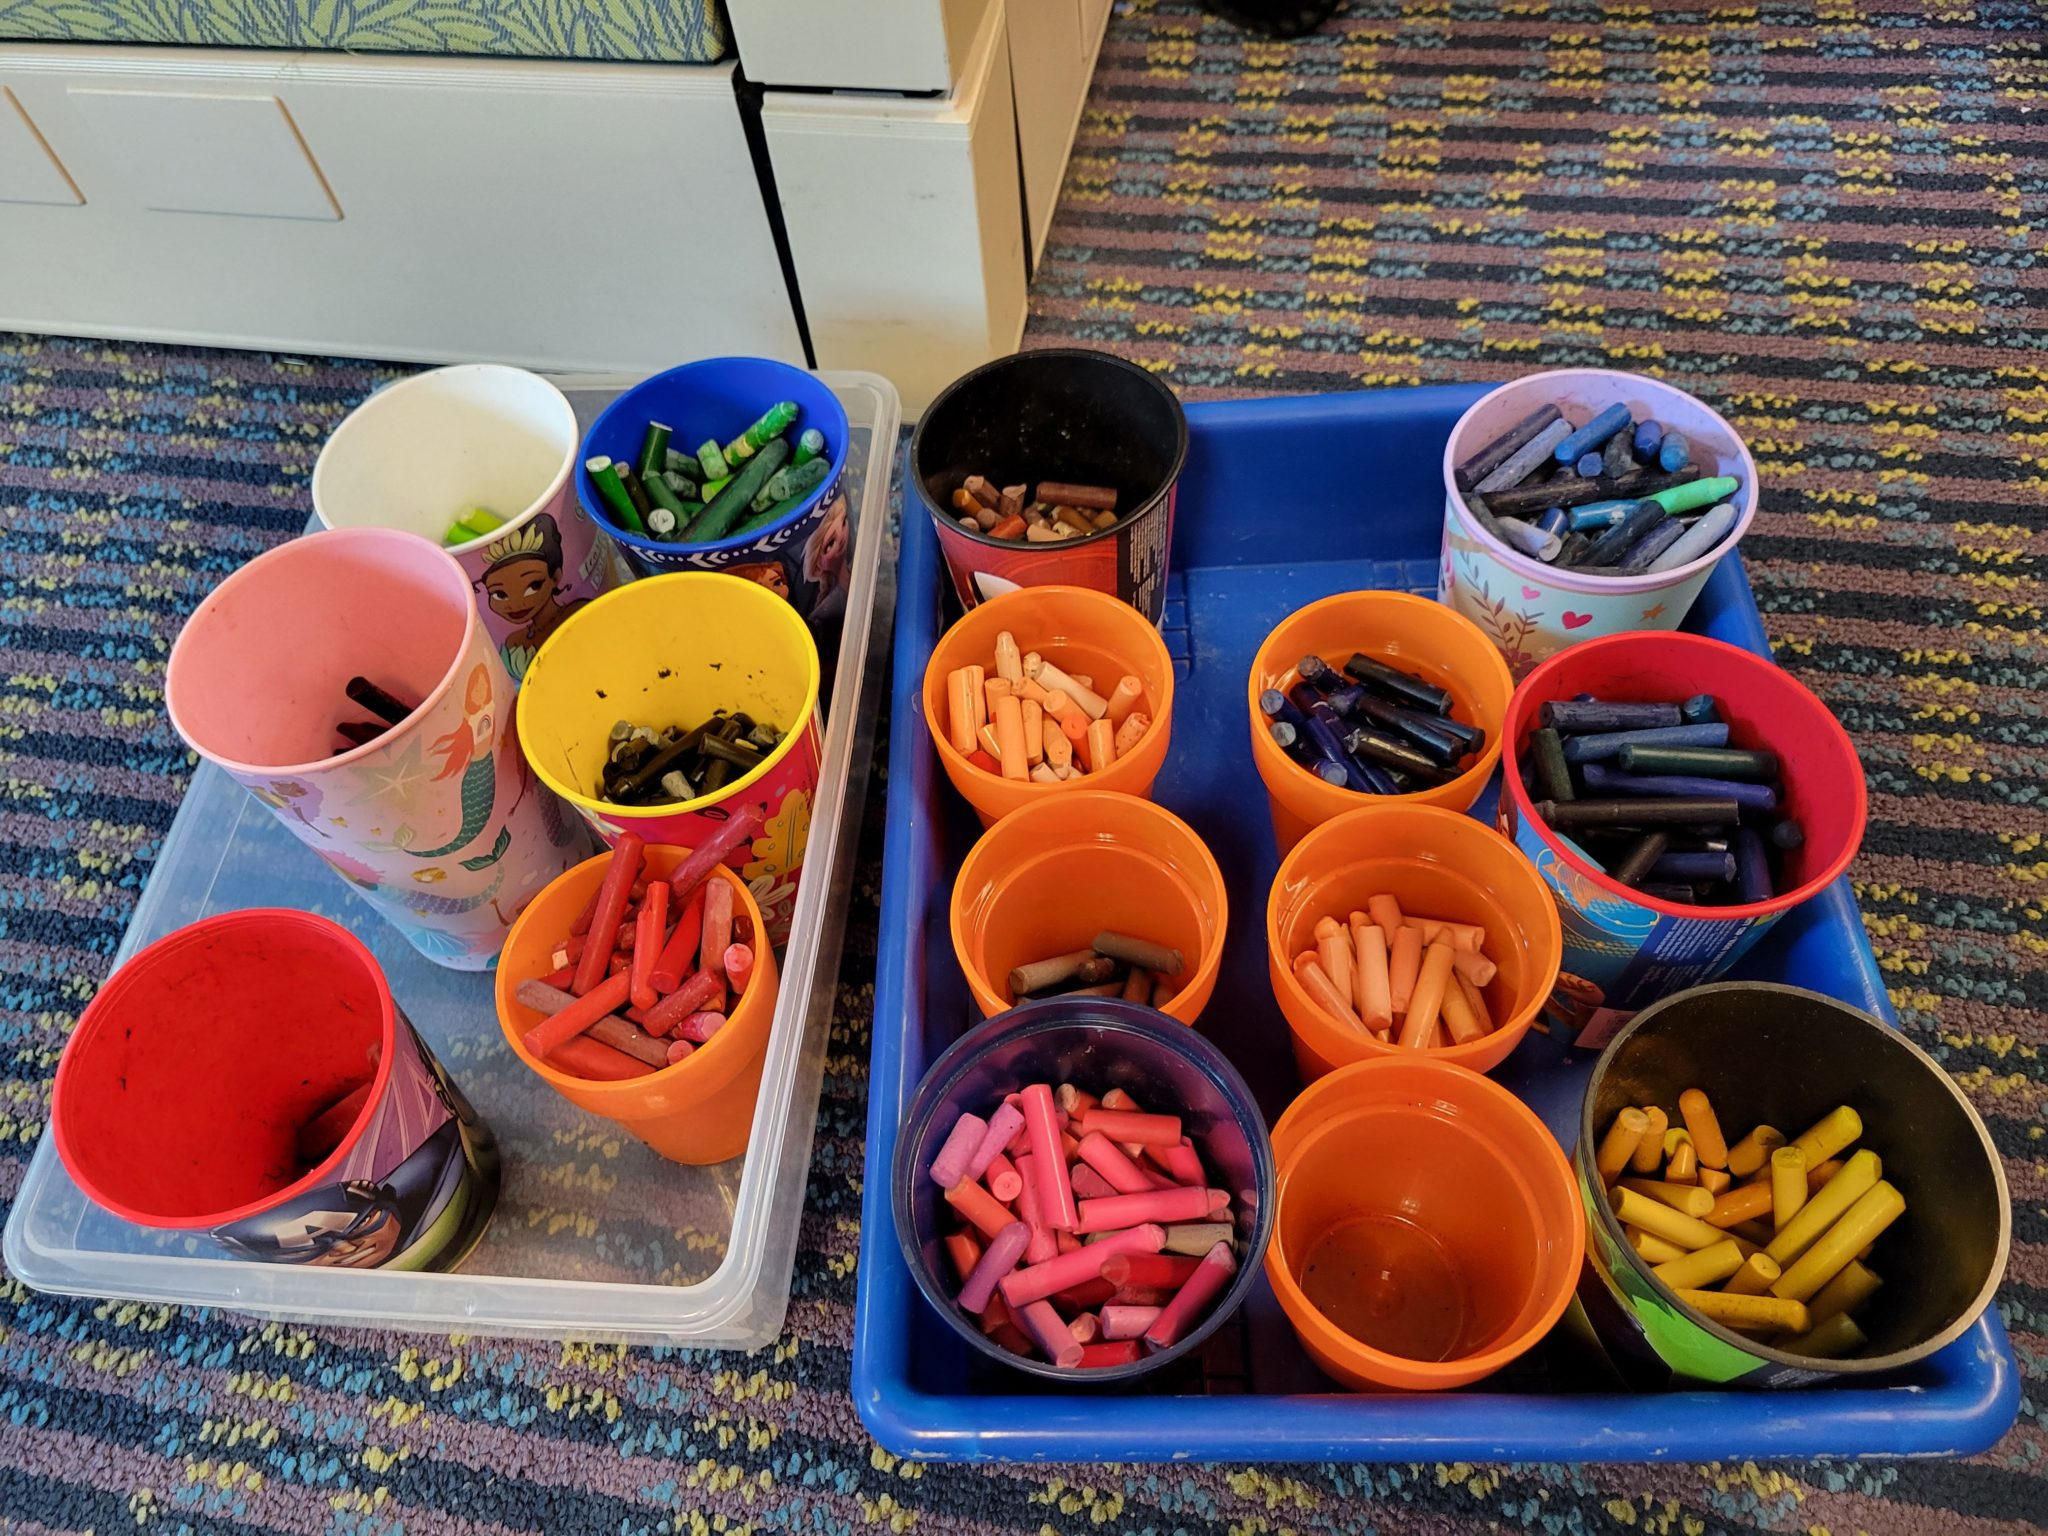 Cups of broken crayons, sorted by color